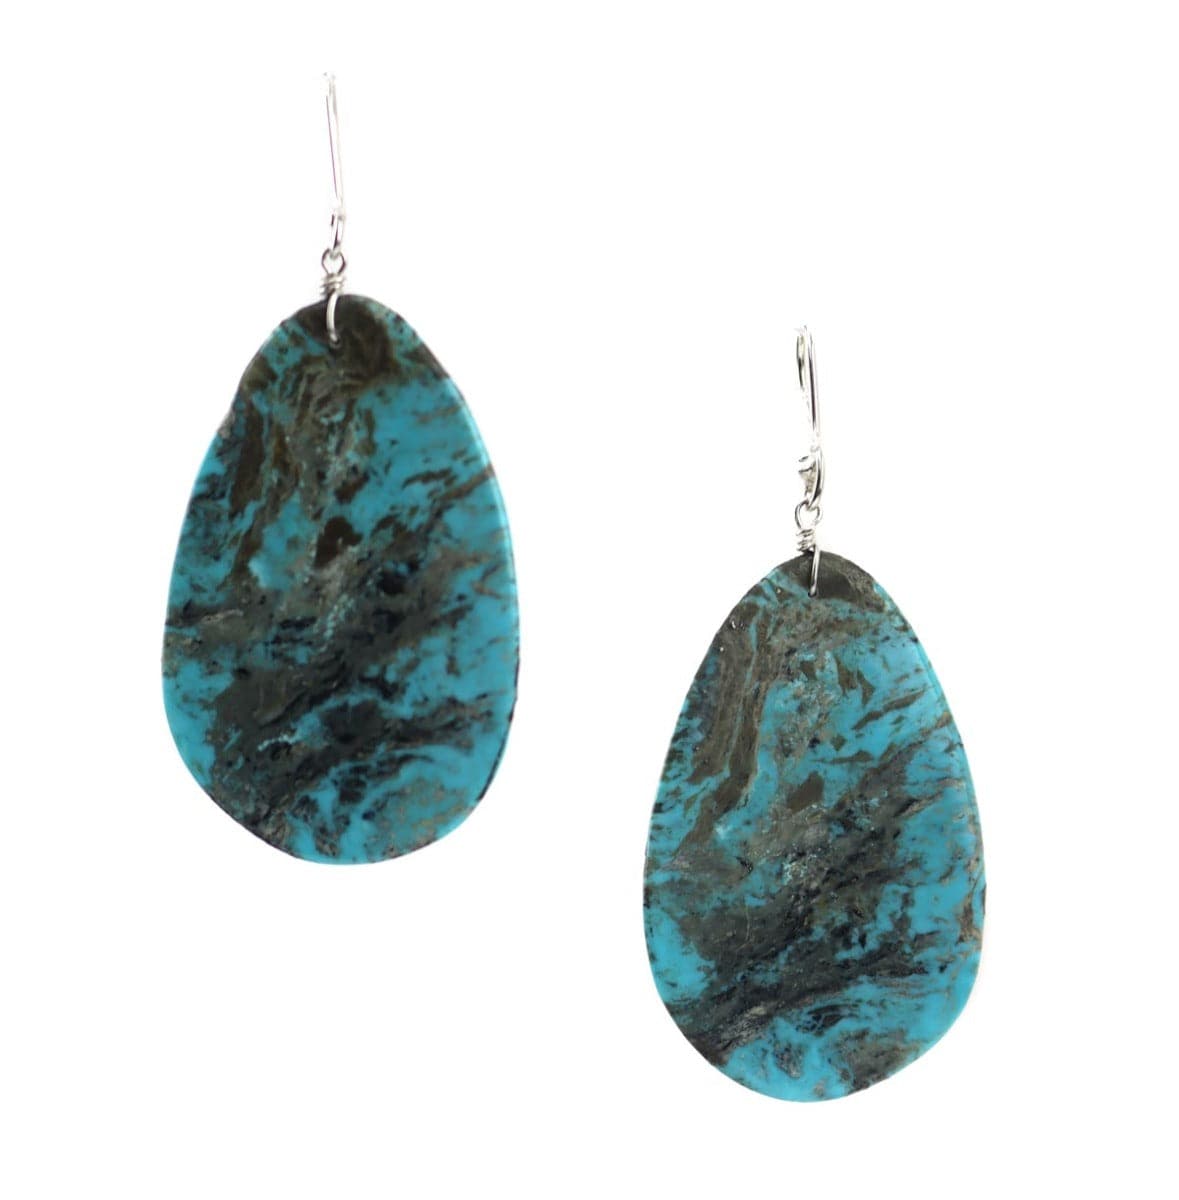 John K. Aguilar - Santo Domingo (Kewa) Contemporary Turquoise and Silver Hook Earrings, 2.5" x 1.25" (J14868)1
